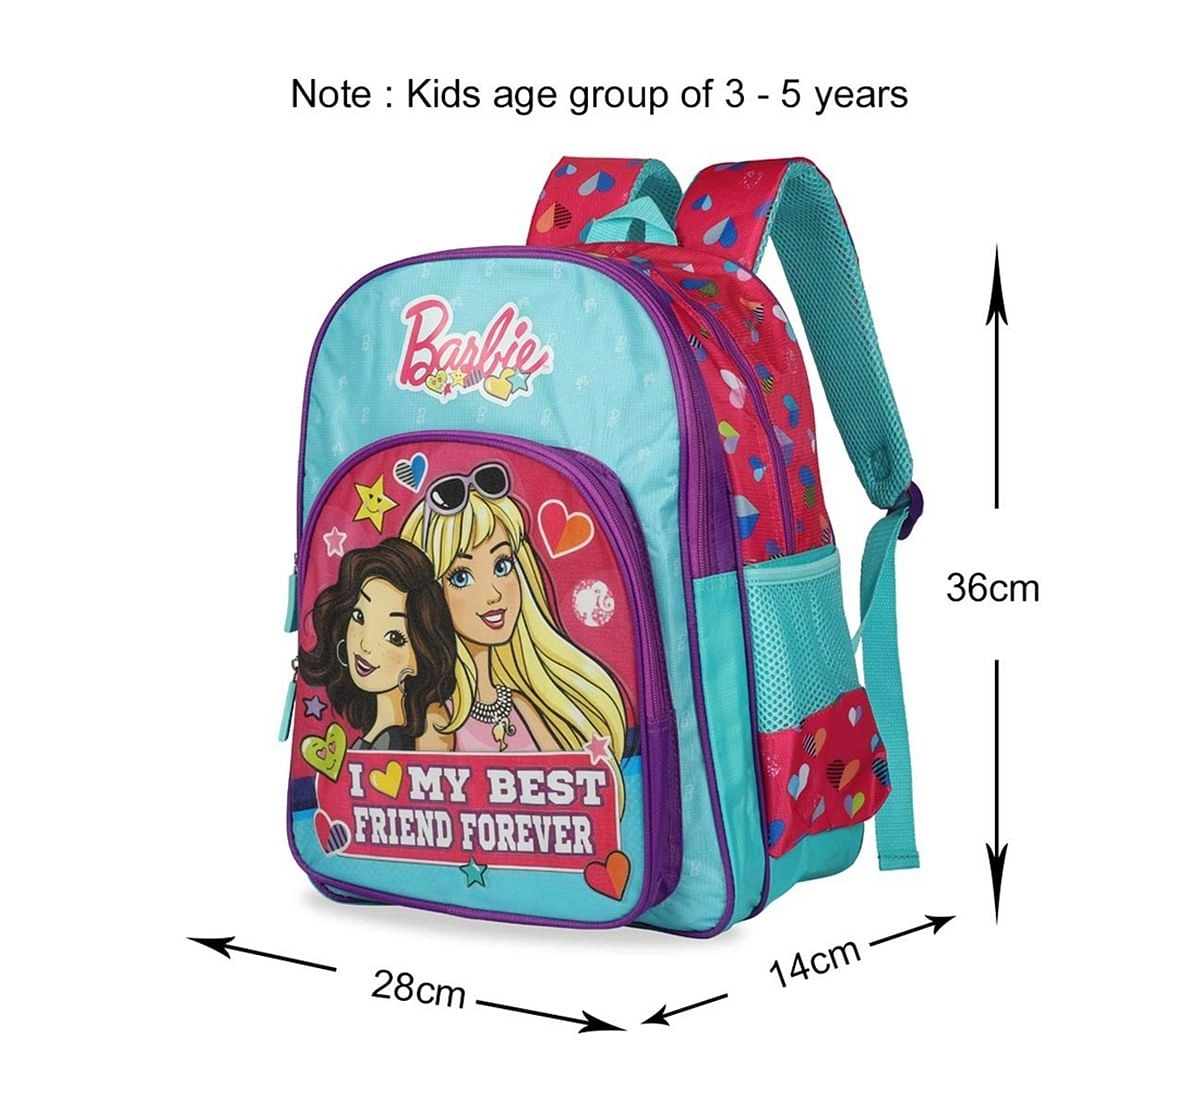 Barbie Barbie Love Best Friend Forever School Bag 36 Cm Bags for age 3Y+ 